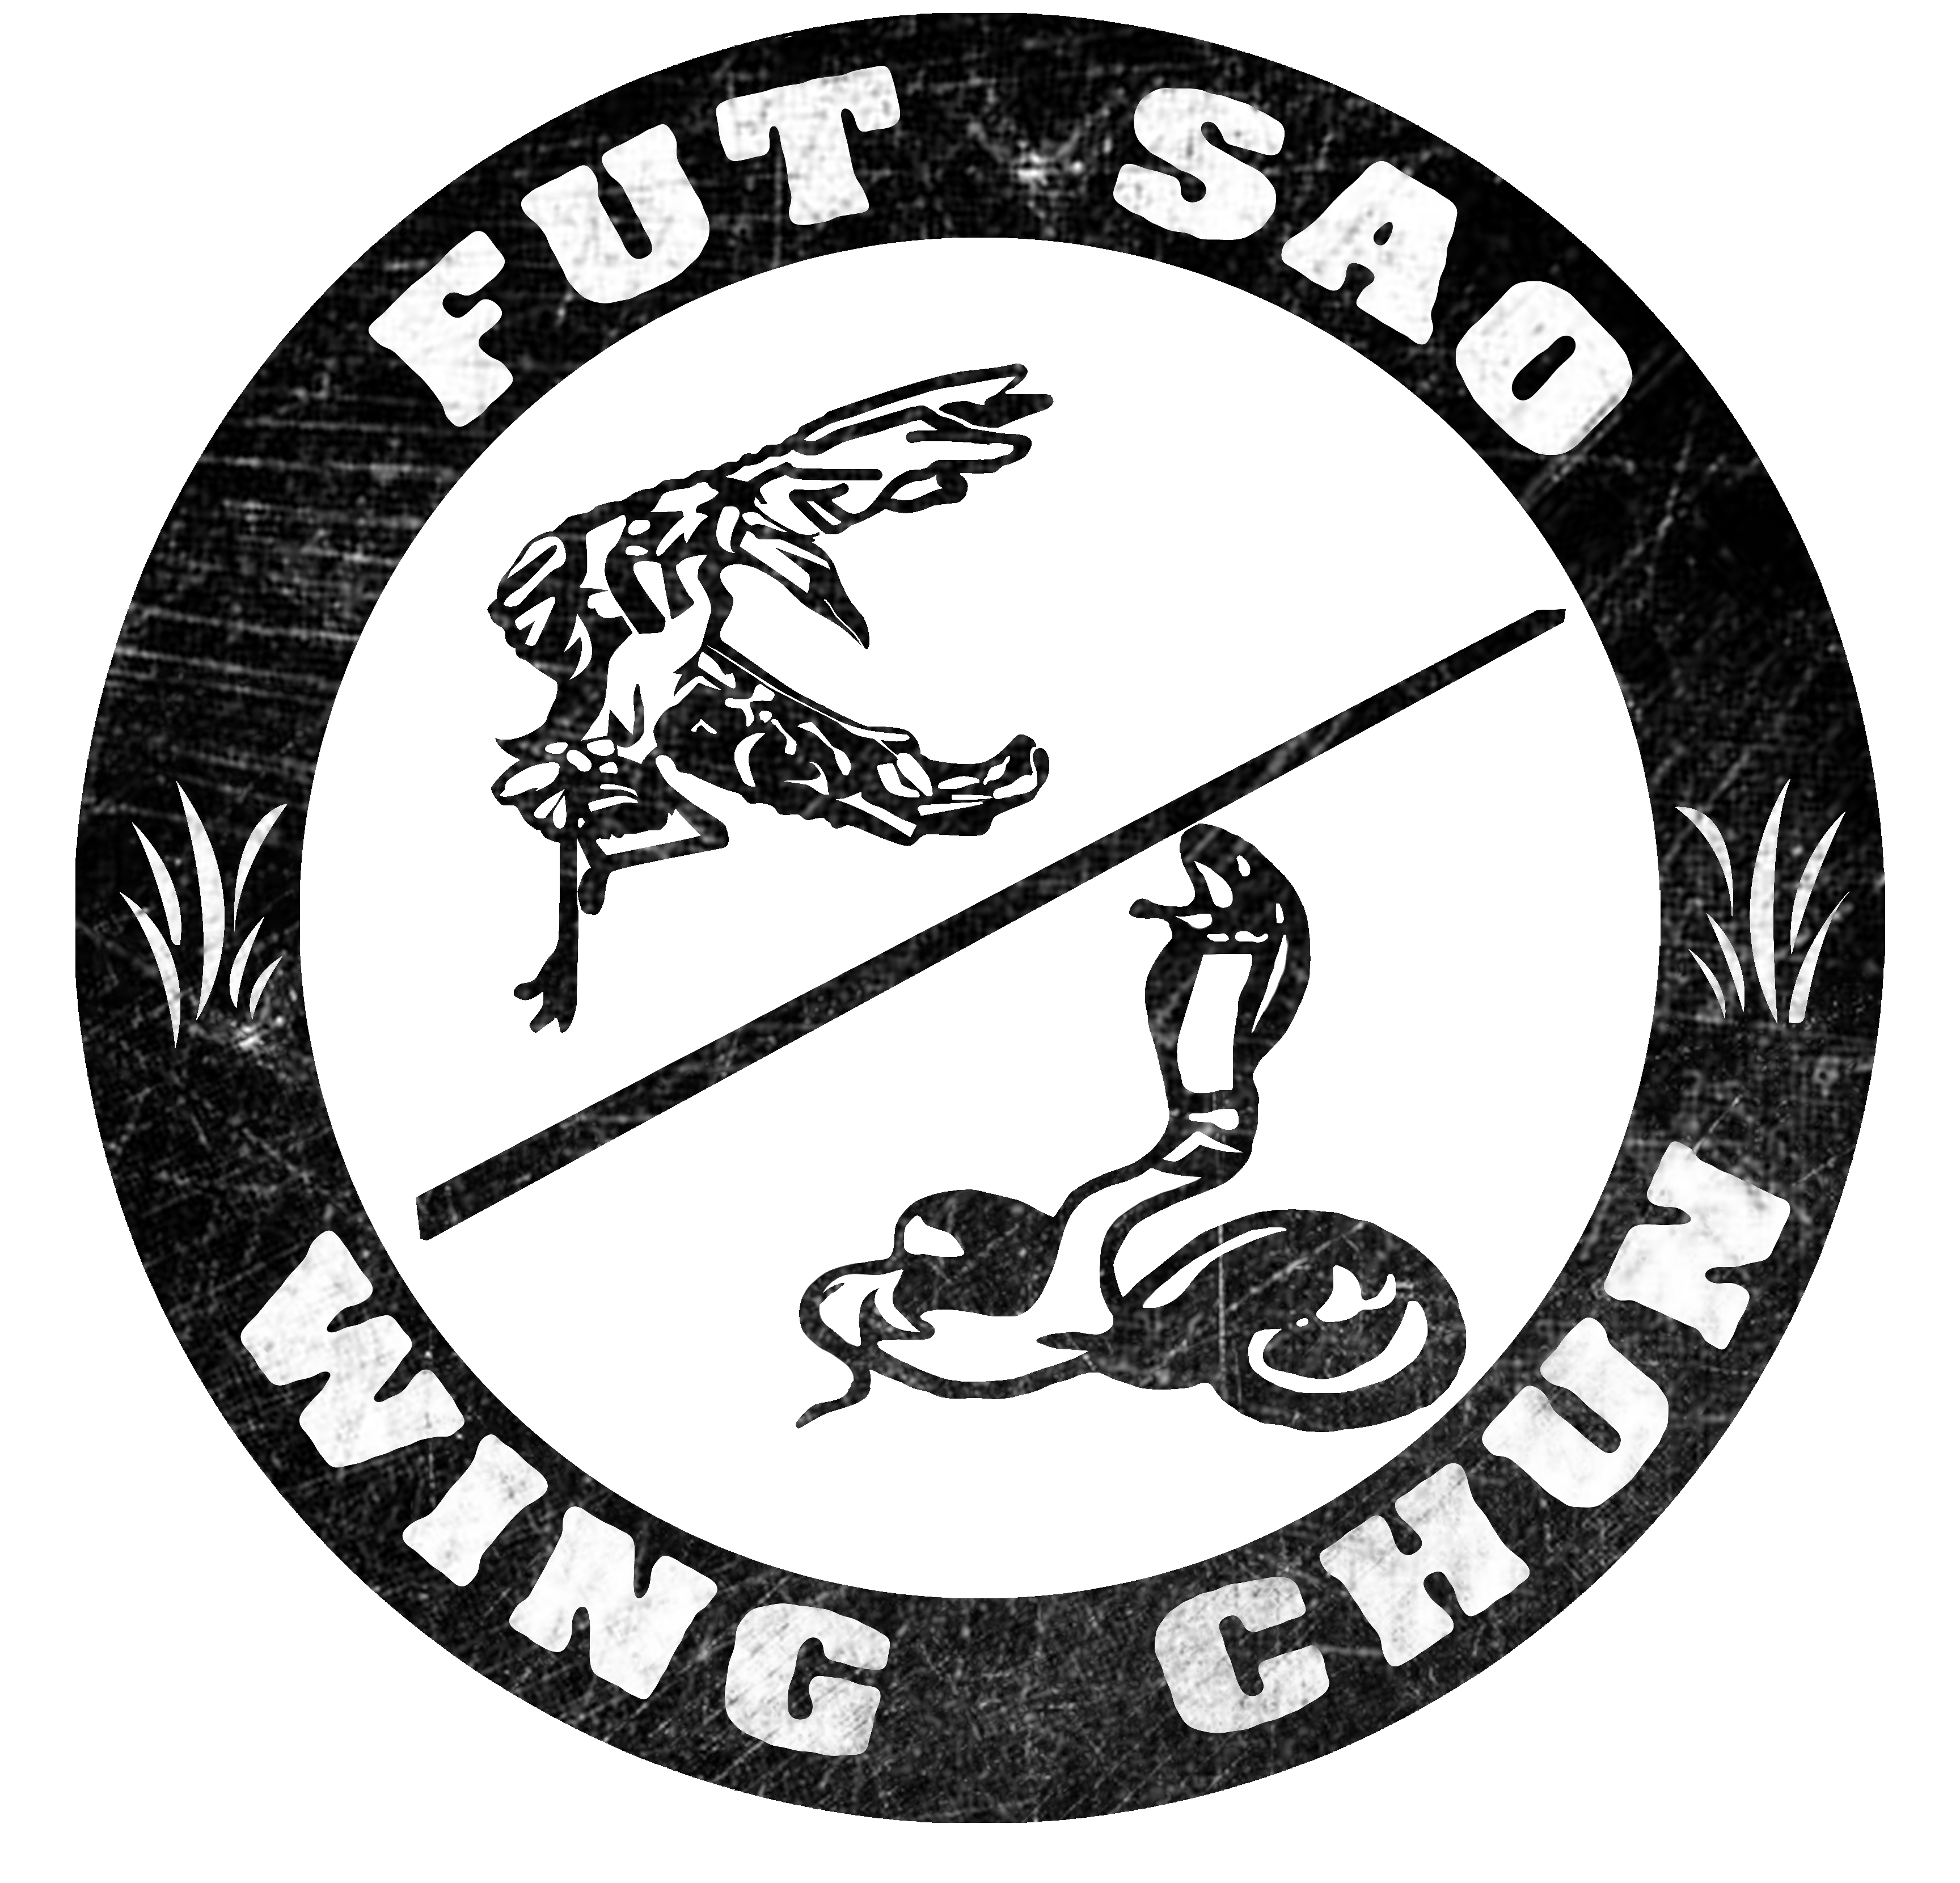 Chicago Fut Sao Wing Chun association logo. Cobra and Crane fighting